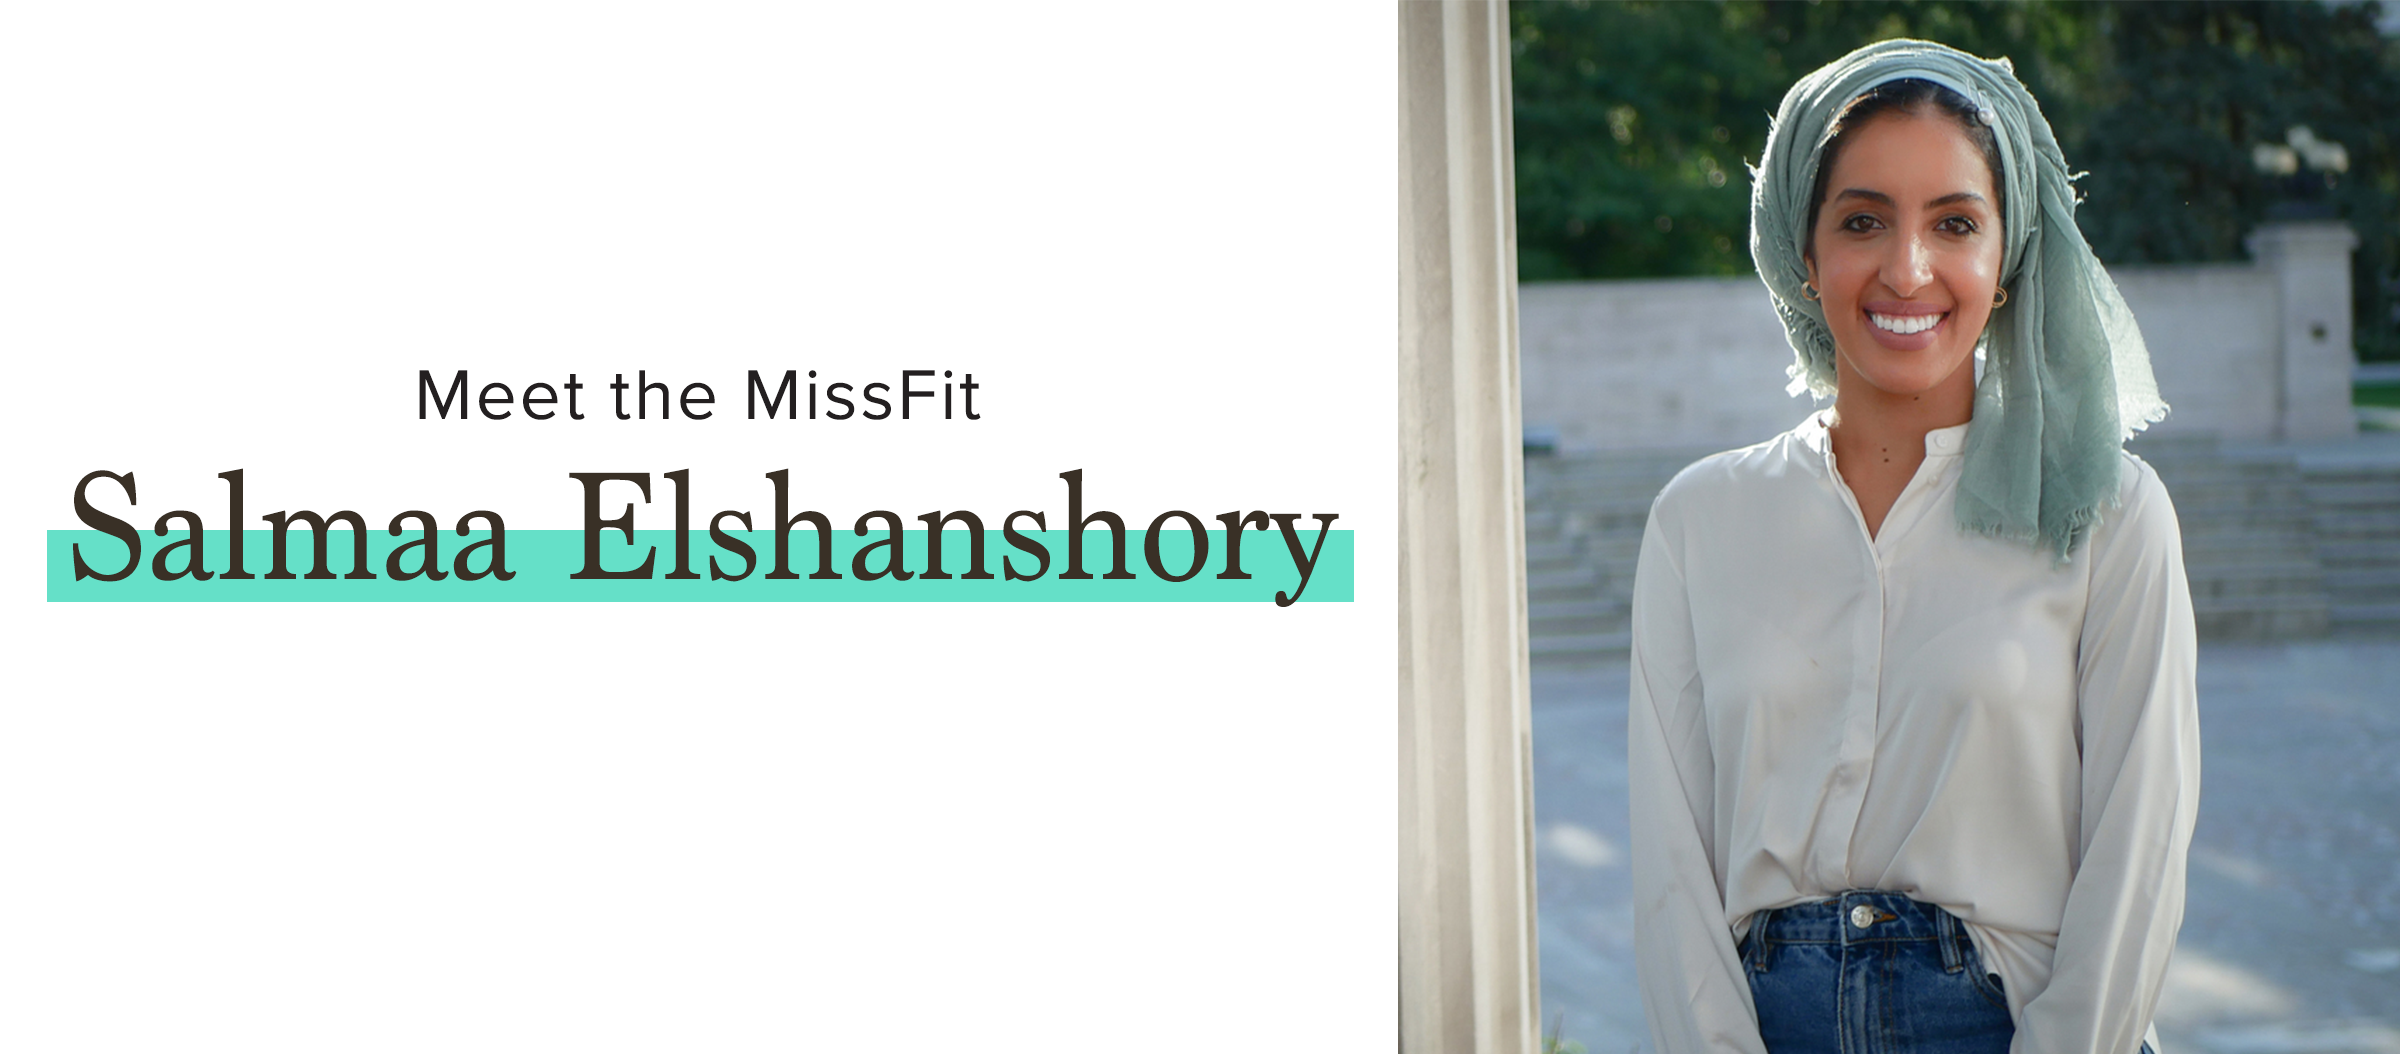 Meet the MissFit, Salmaa Elshanshory